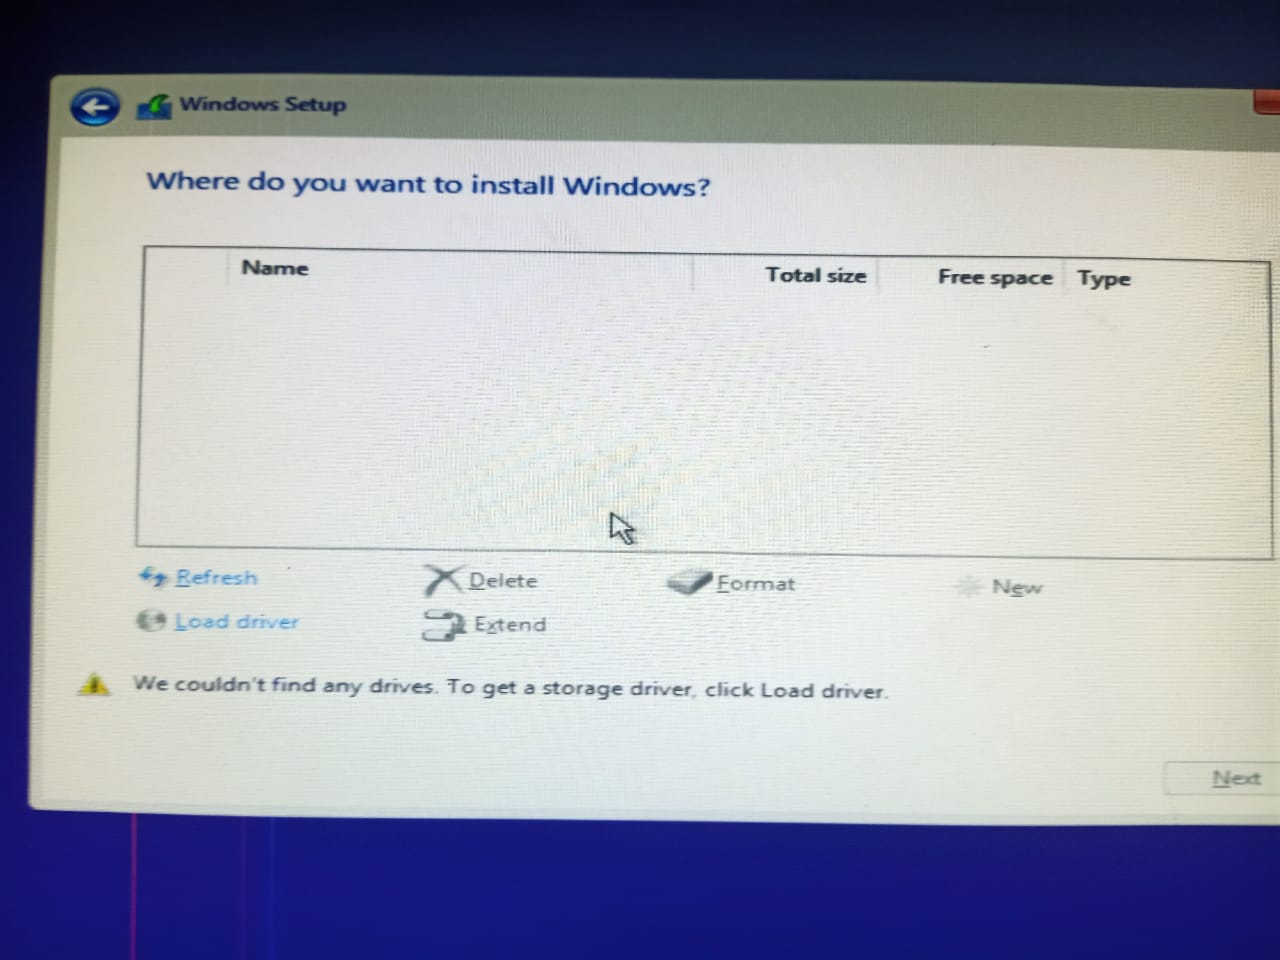 Error while clean installing Windows 10 e26c2745-7ae2-4878-b99e-0a35201de95a?upload=true.jpg